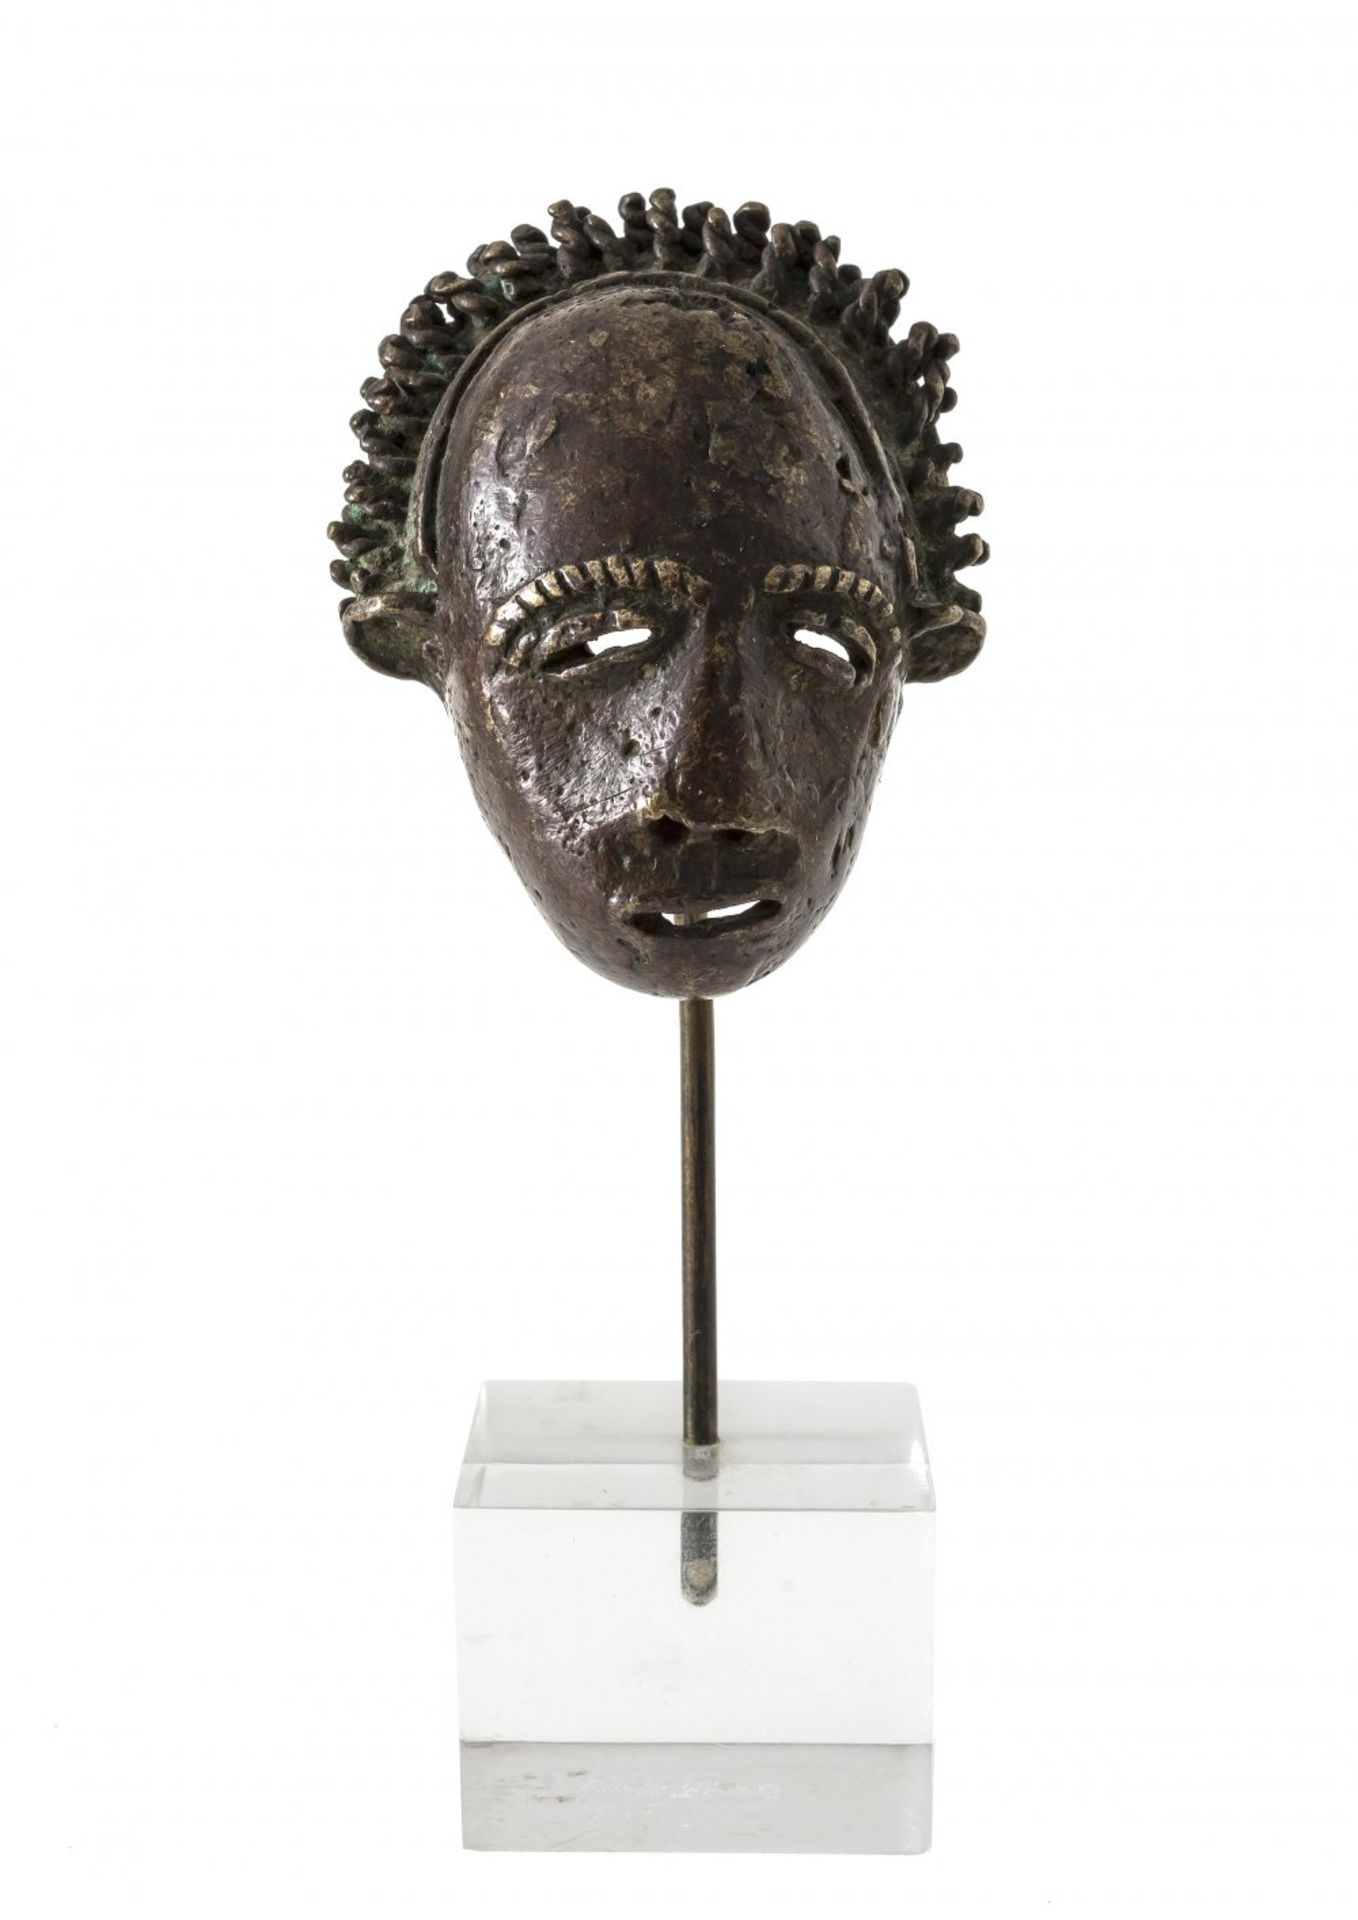 Kleine MaskeAshanti, Ghana. Messingguss. H. 4,8 cm.A small brass maskAshanti. Ghana. H. 4,8